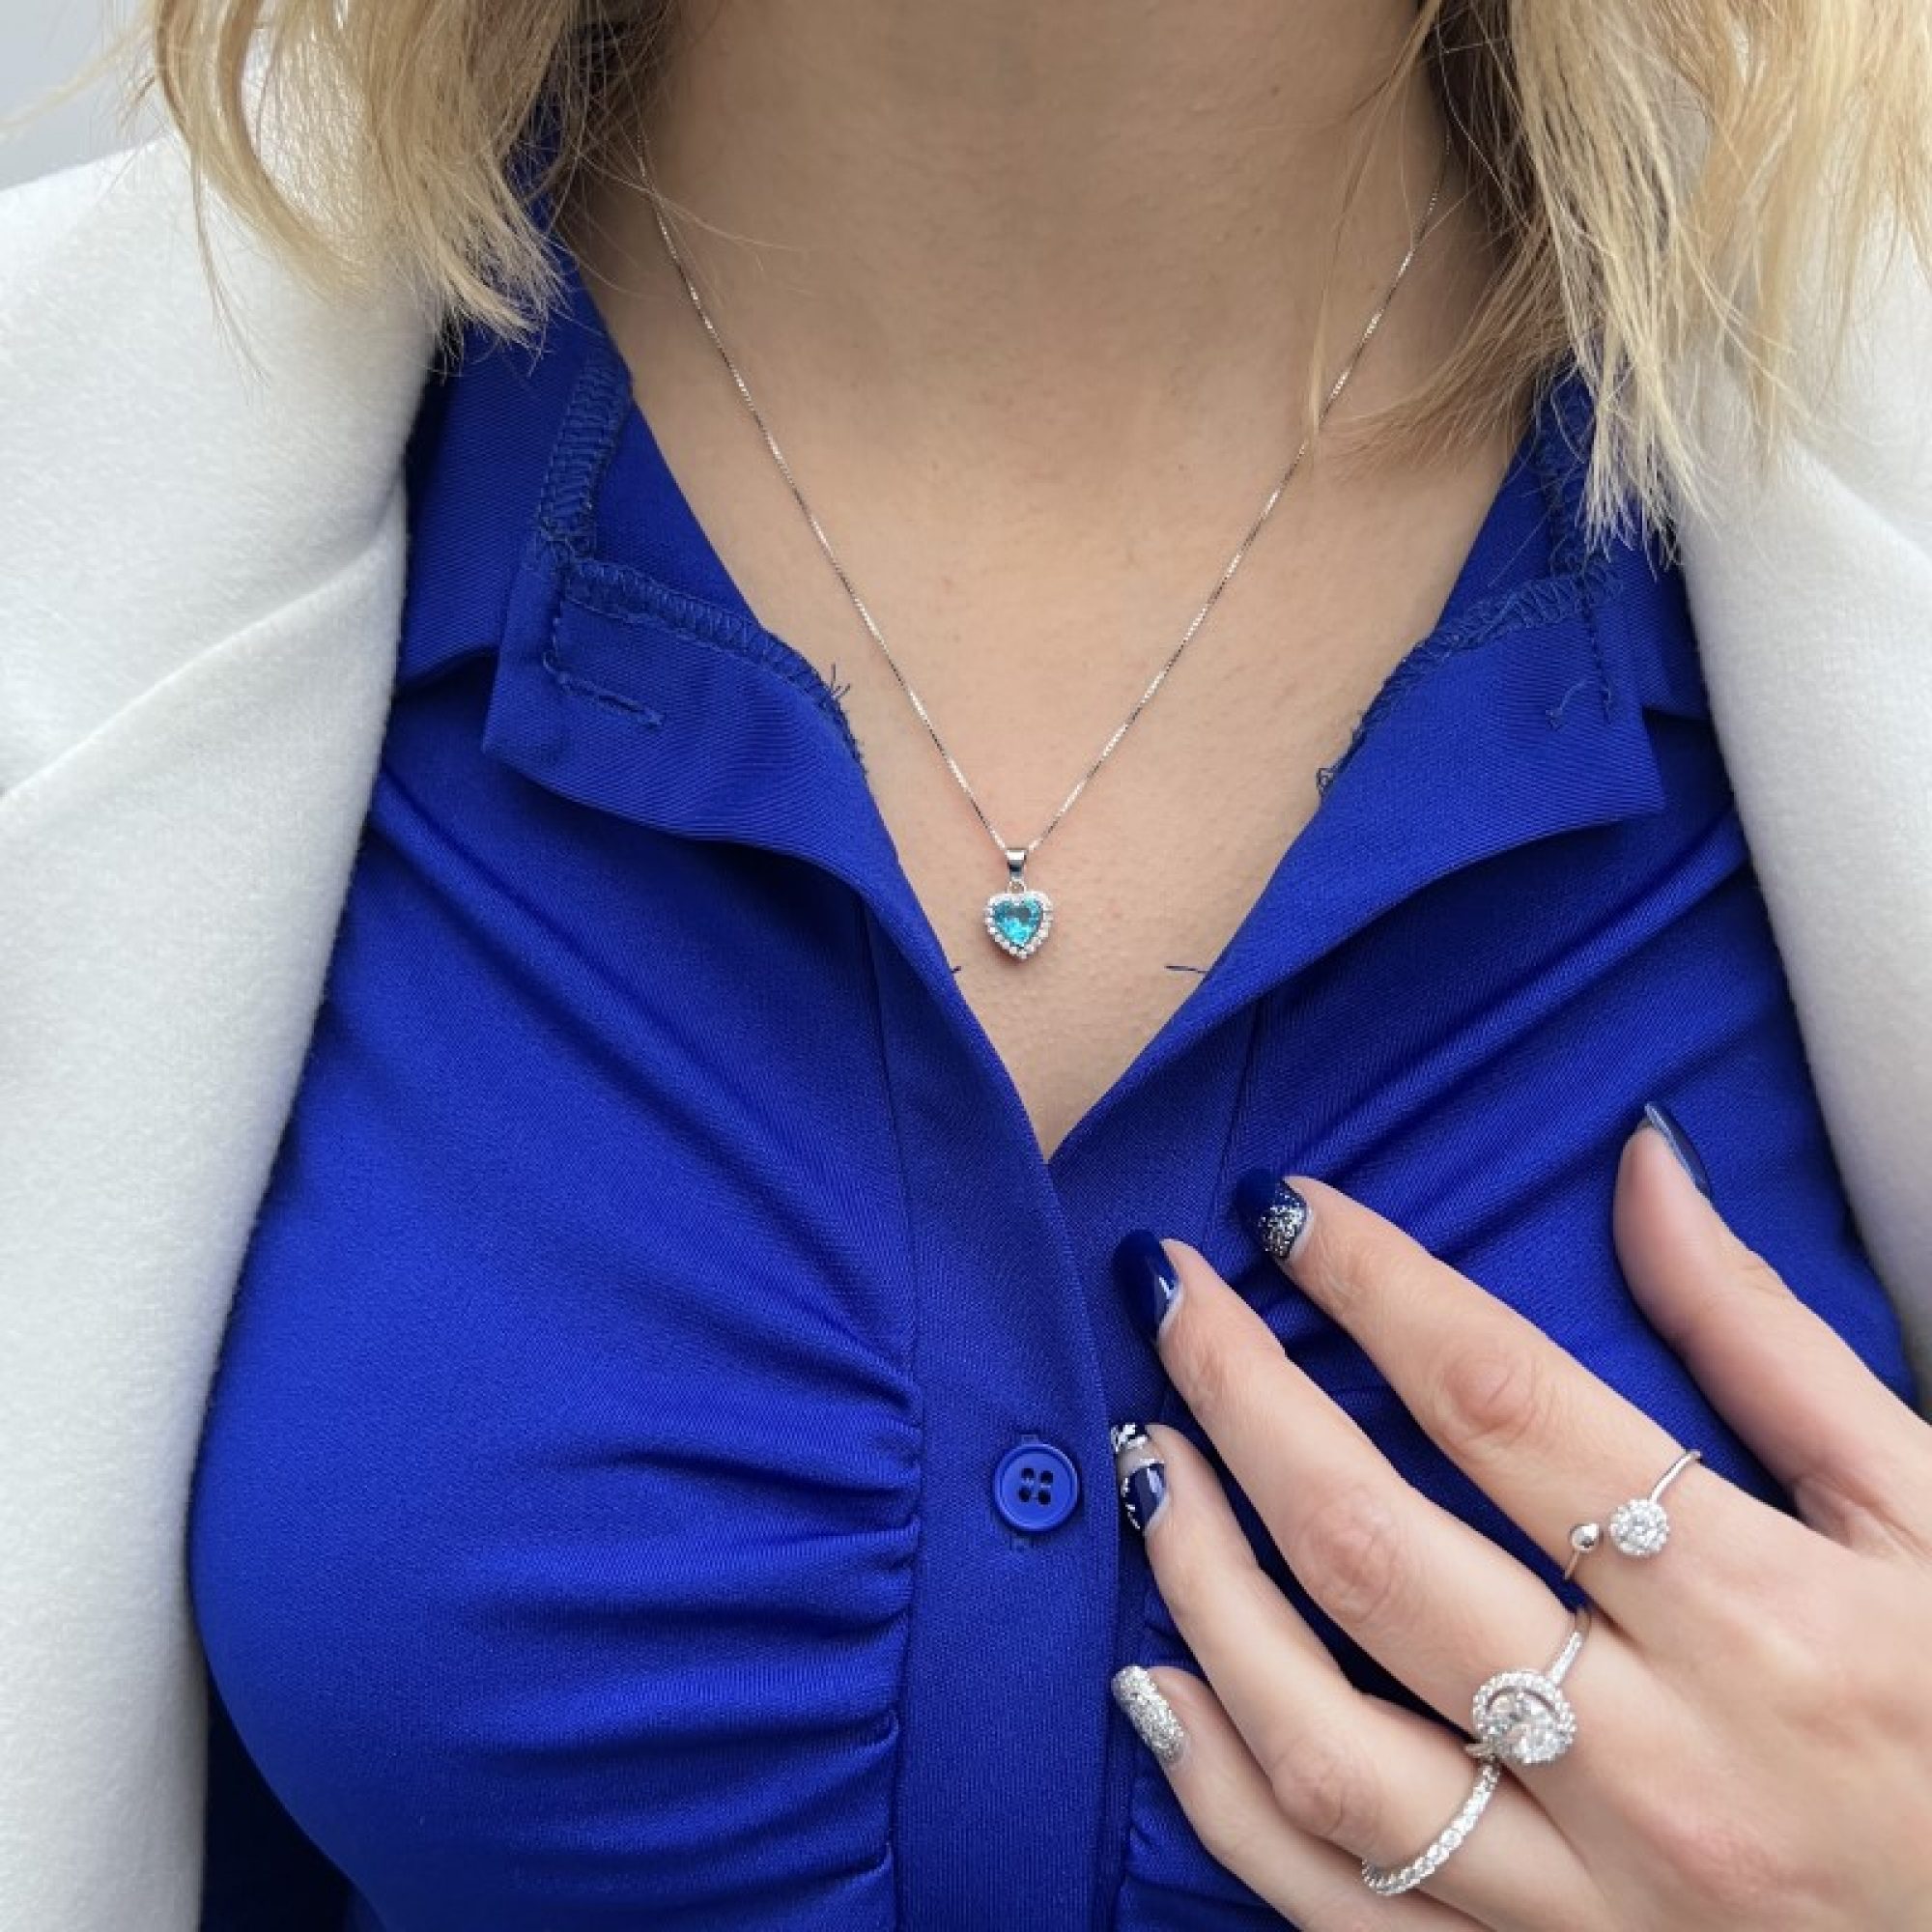 Heart necklace with aquamarine and zircon stones